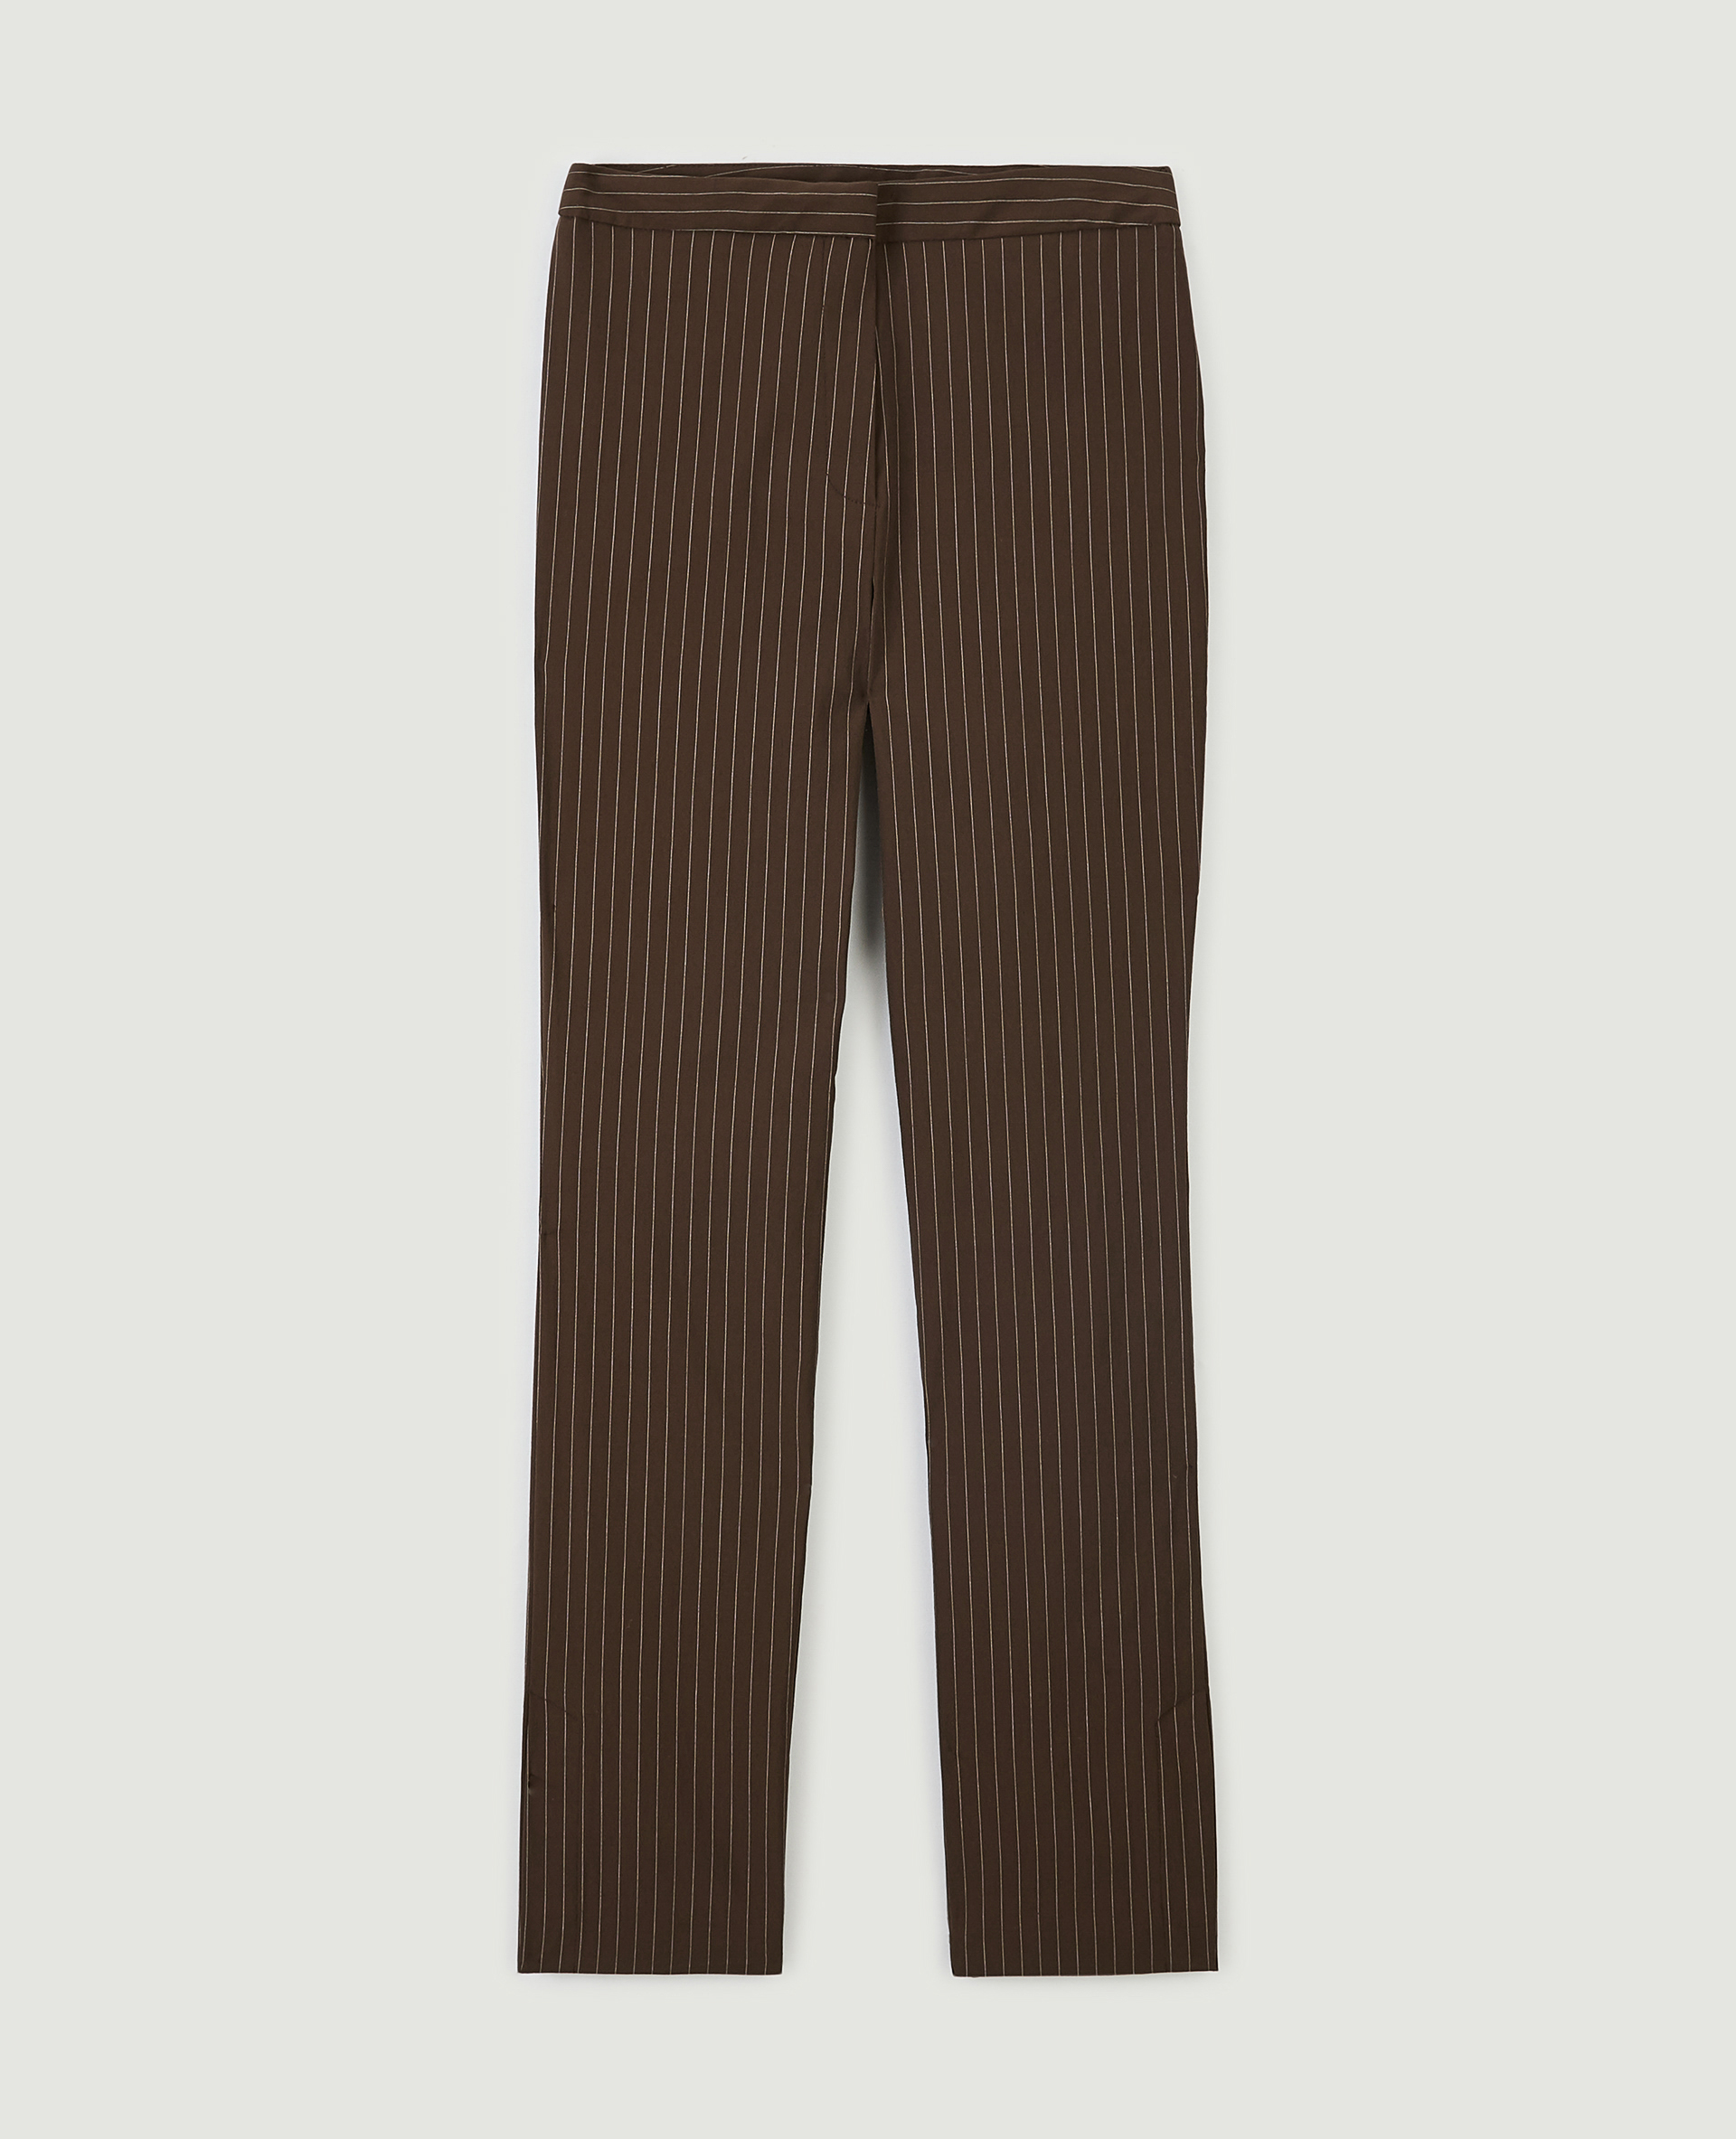 Pantalon slim droit avec fentes marron - Pimkie